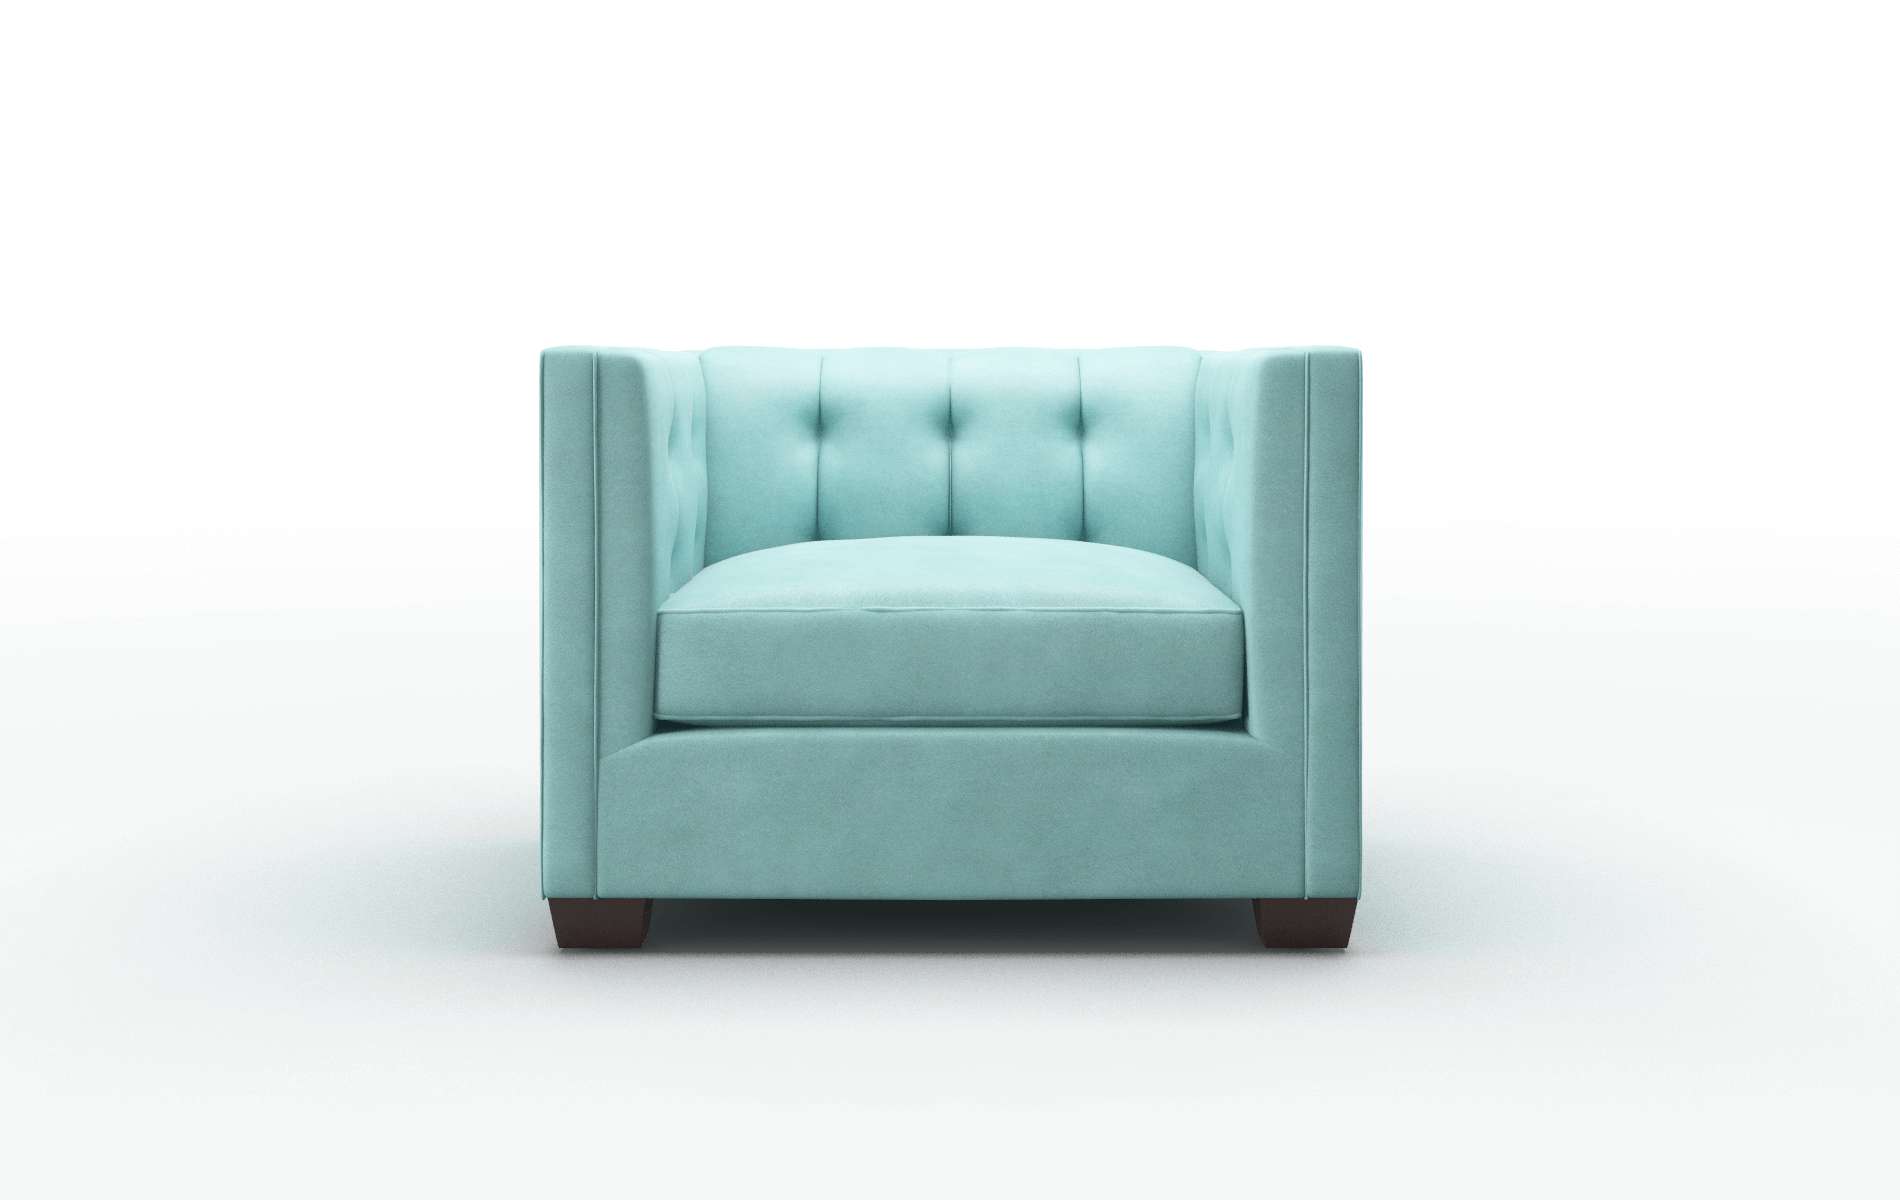 Grant Curious Turquoise chair espresso legs